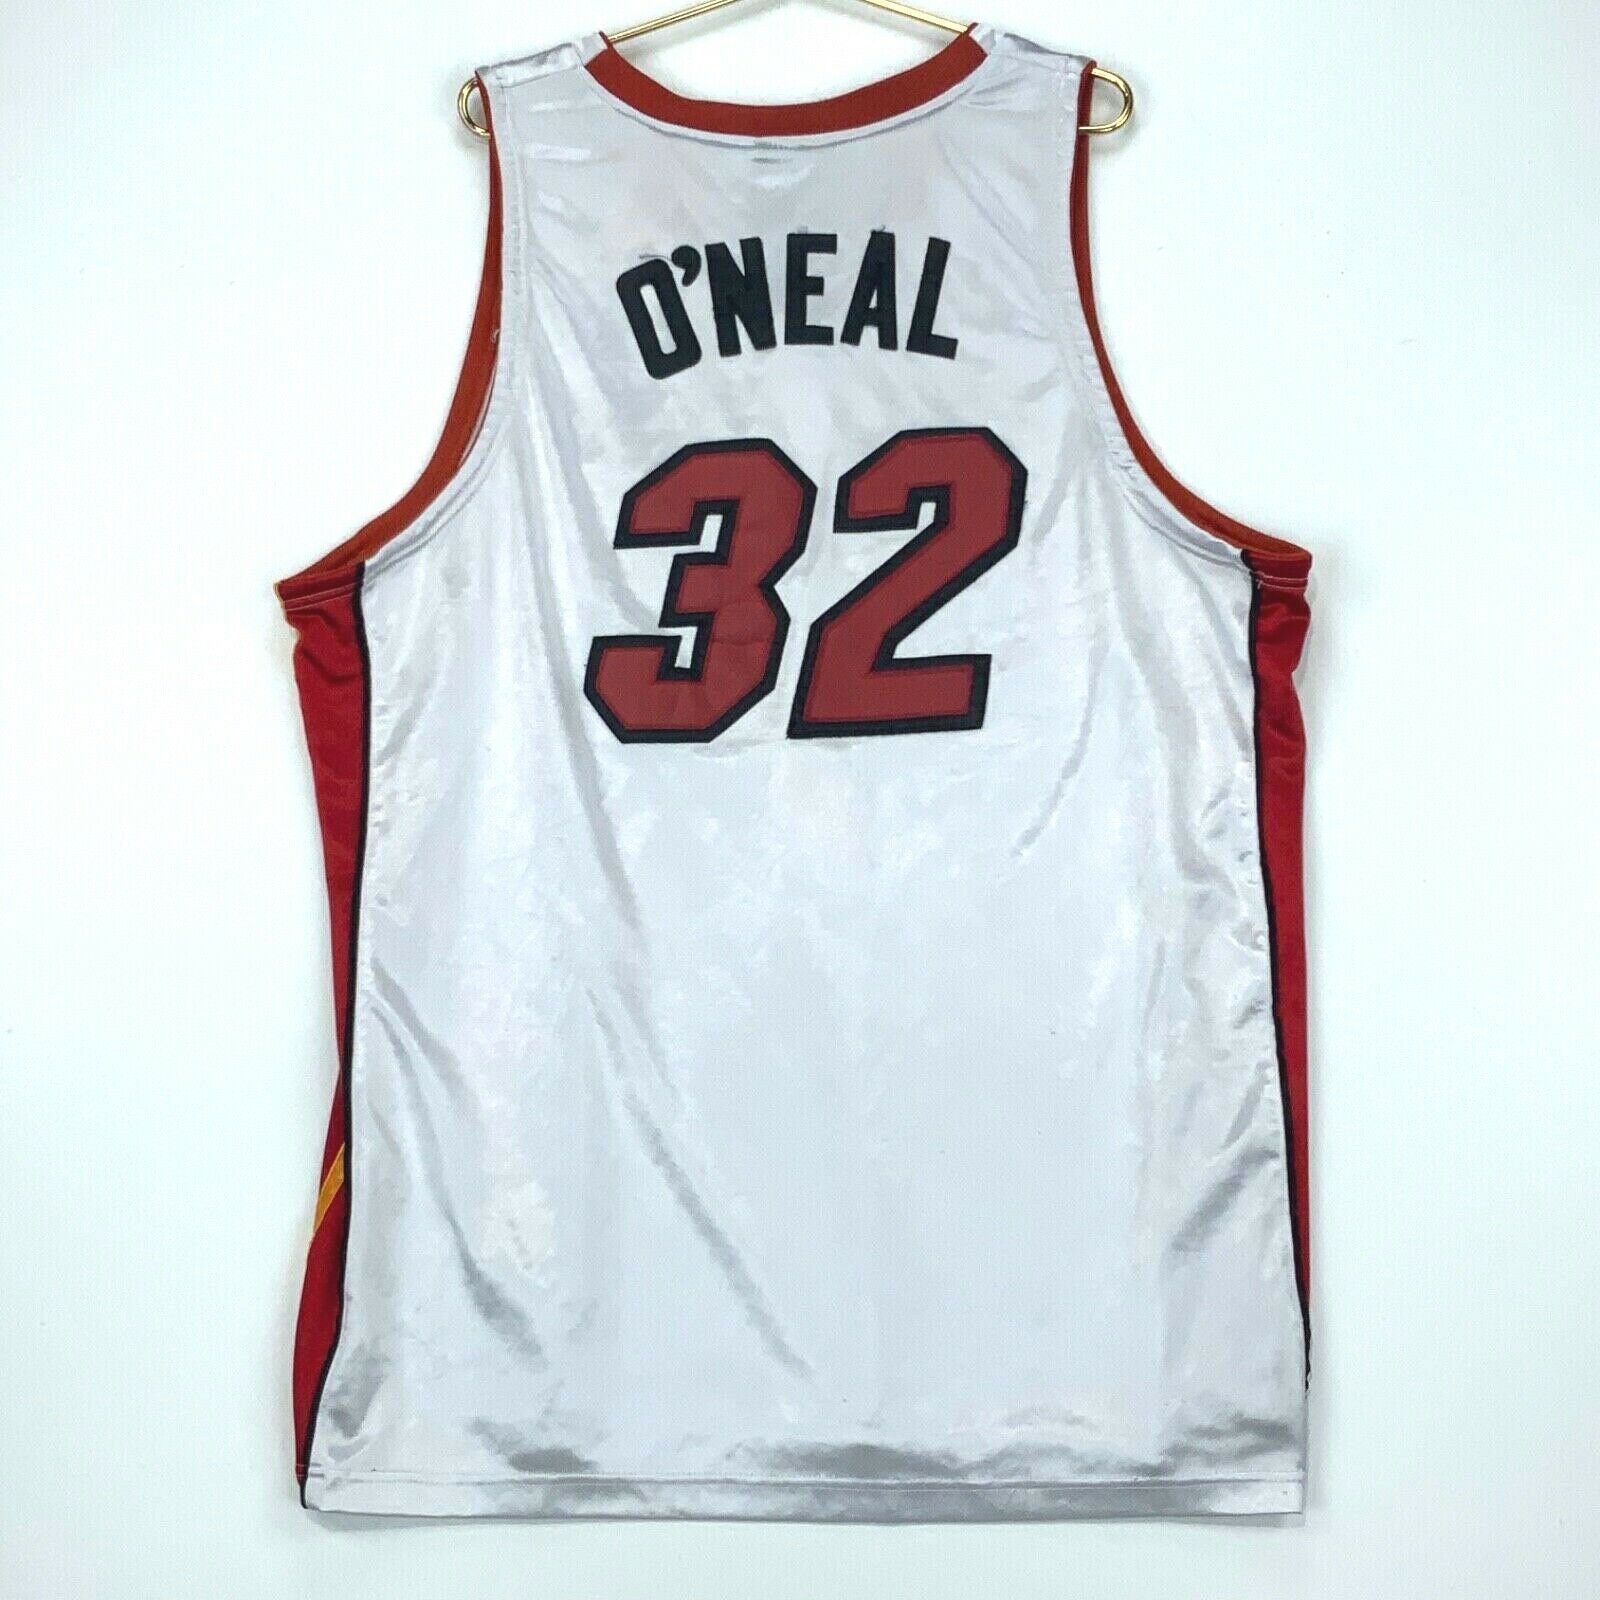 Miami Heat Champion NBA Jersey #32 Shaquille O'Neal Basketball Men Size XL